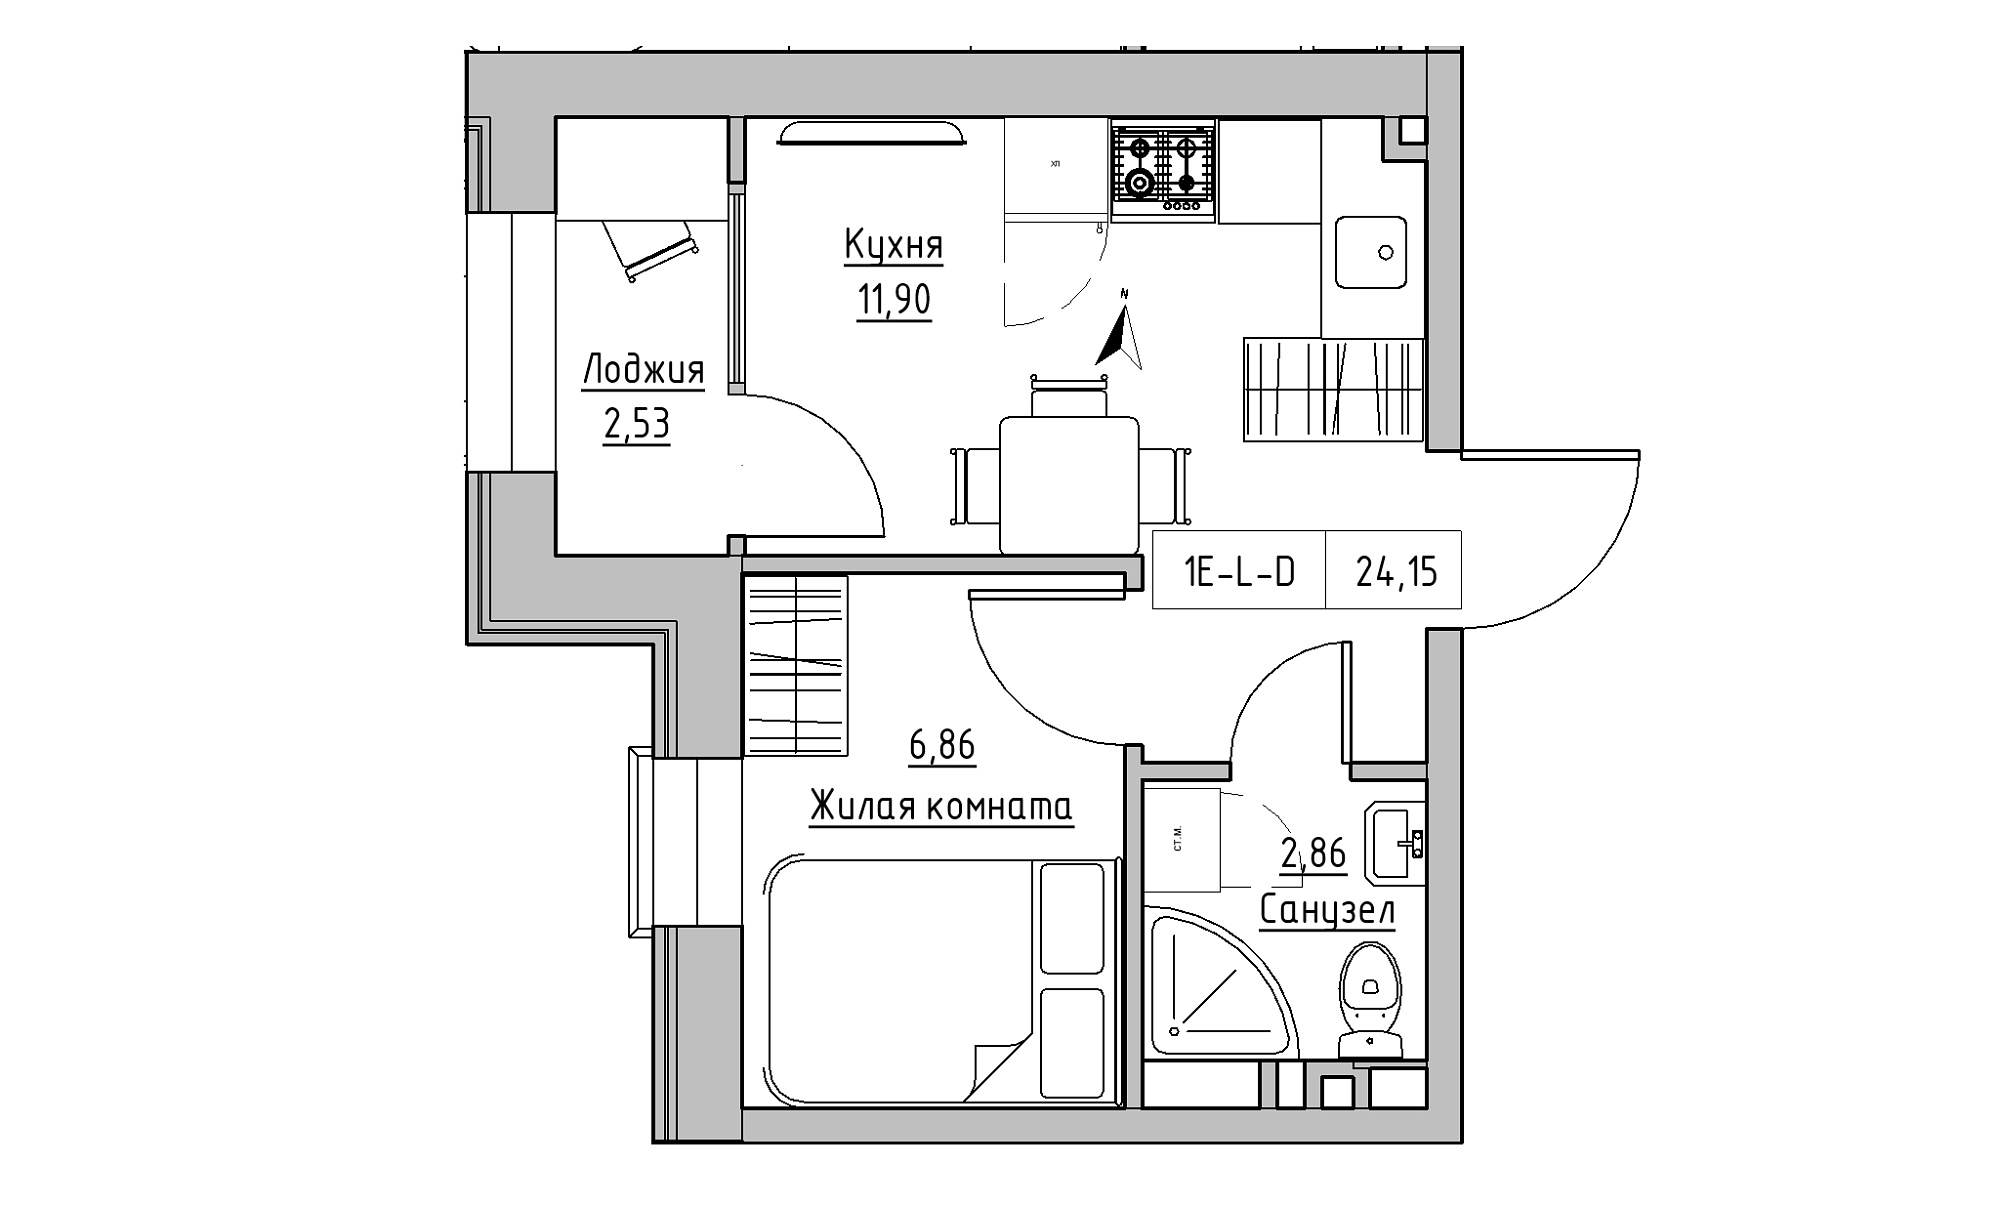 Planning 1-rm flats area 24.15m2, KS-023-05/0001.